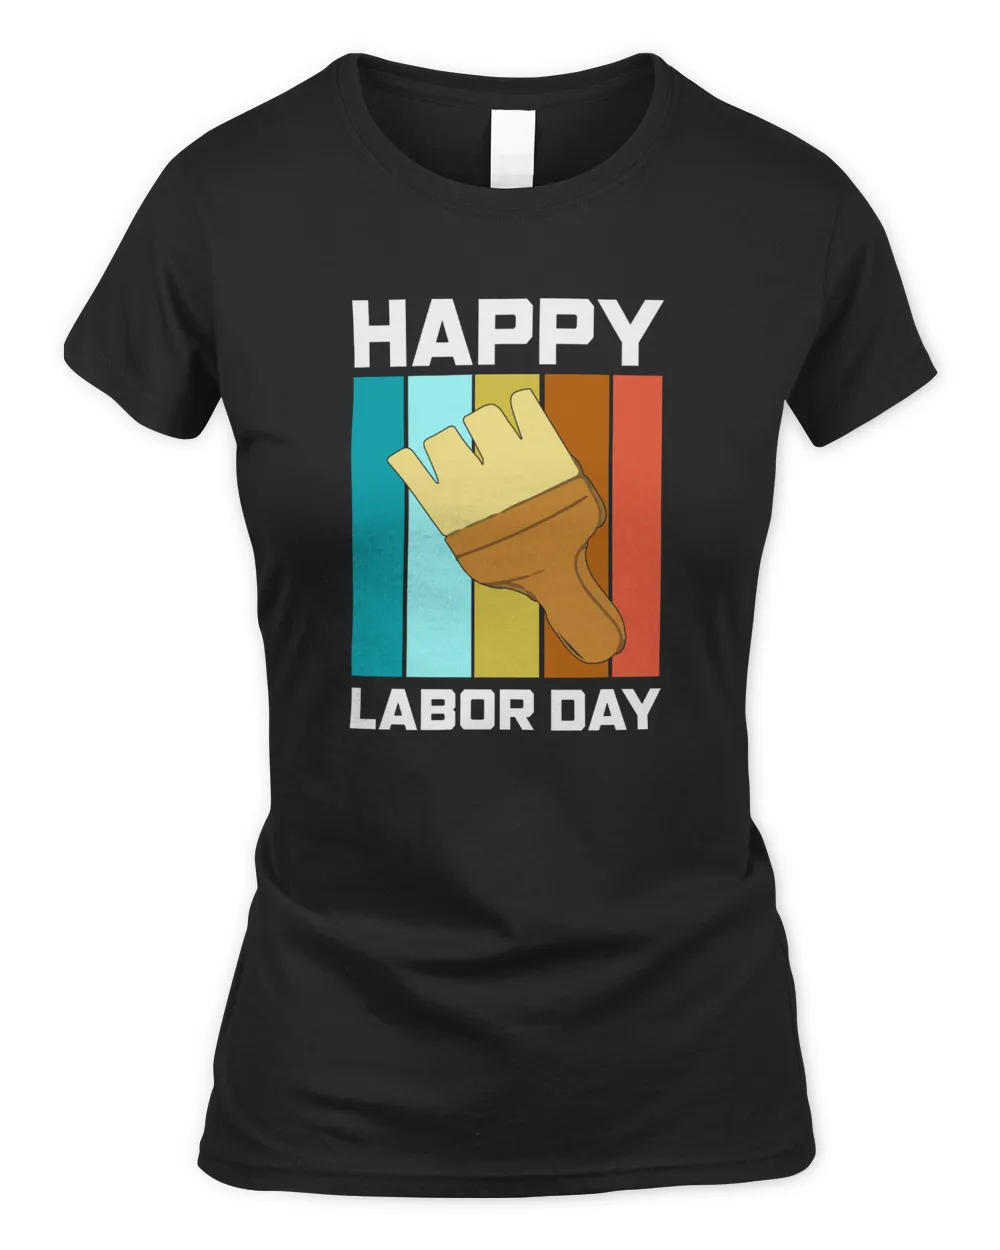 Happy labor day 2021